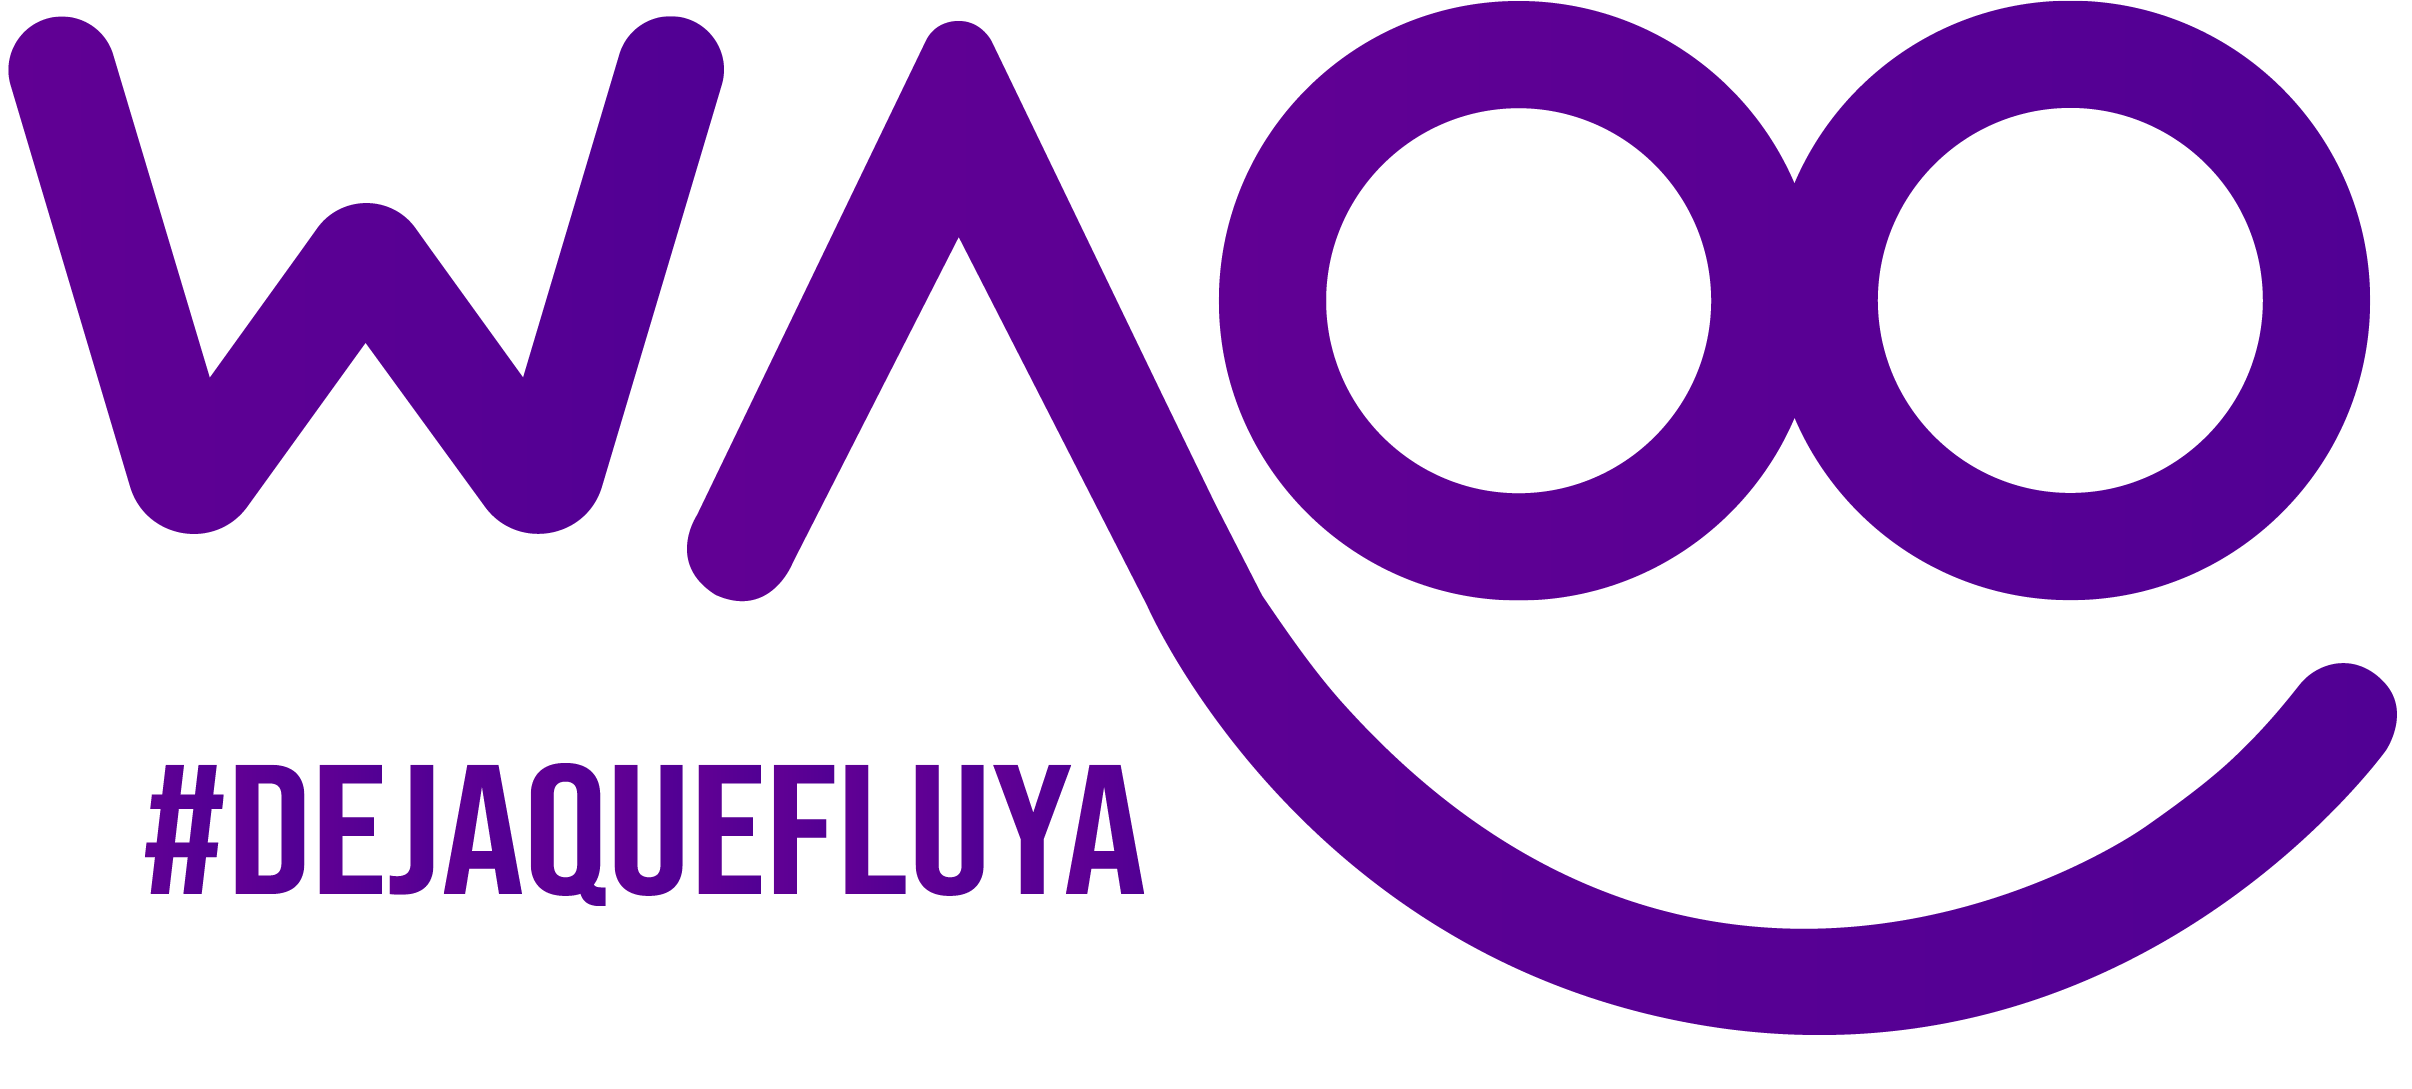 Waoo-logo